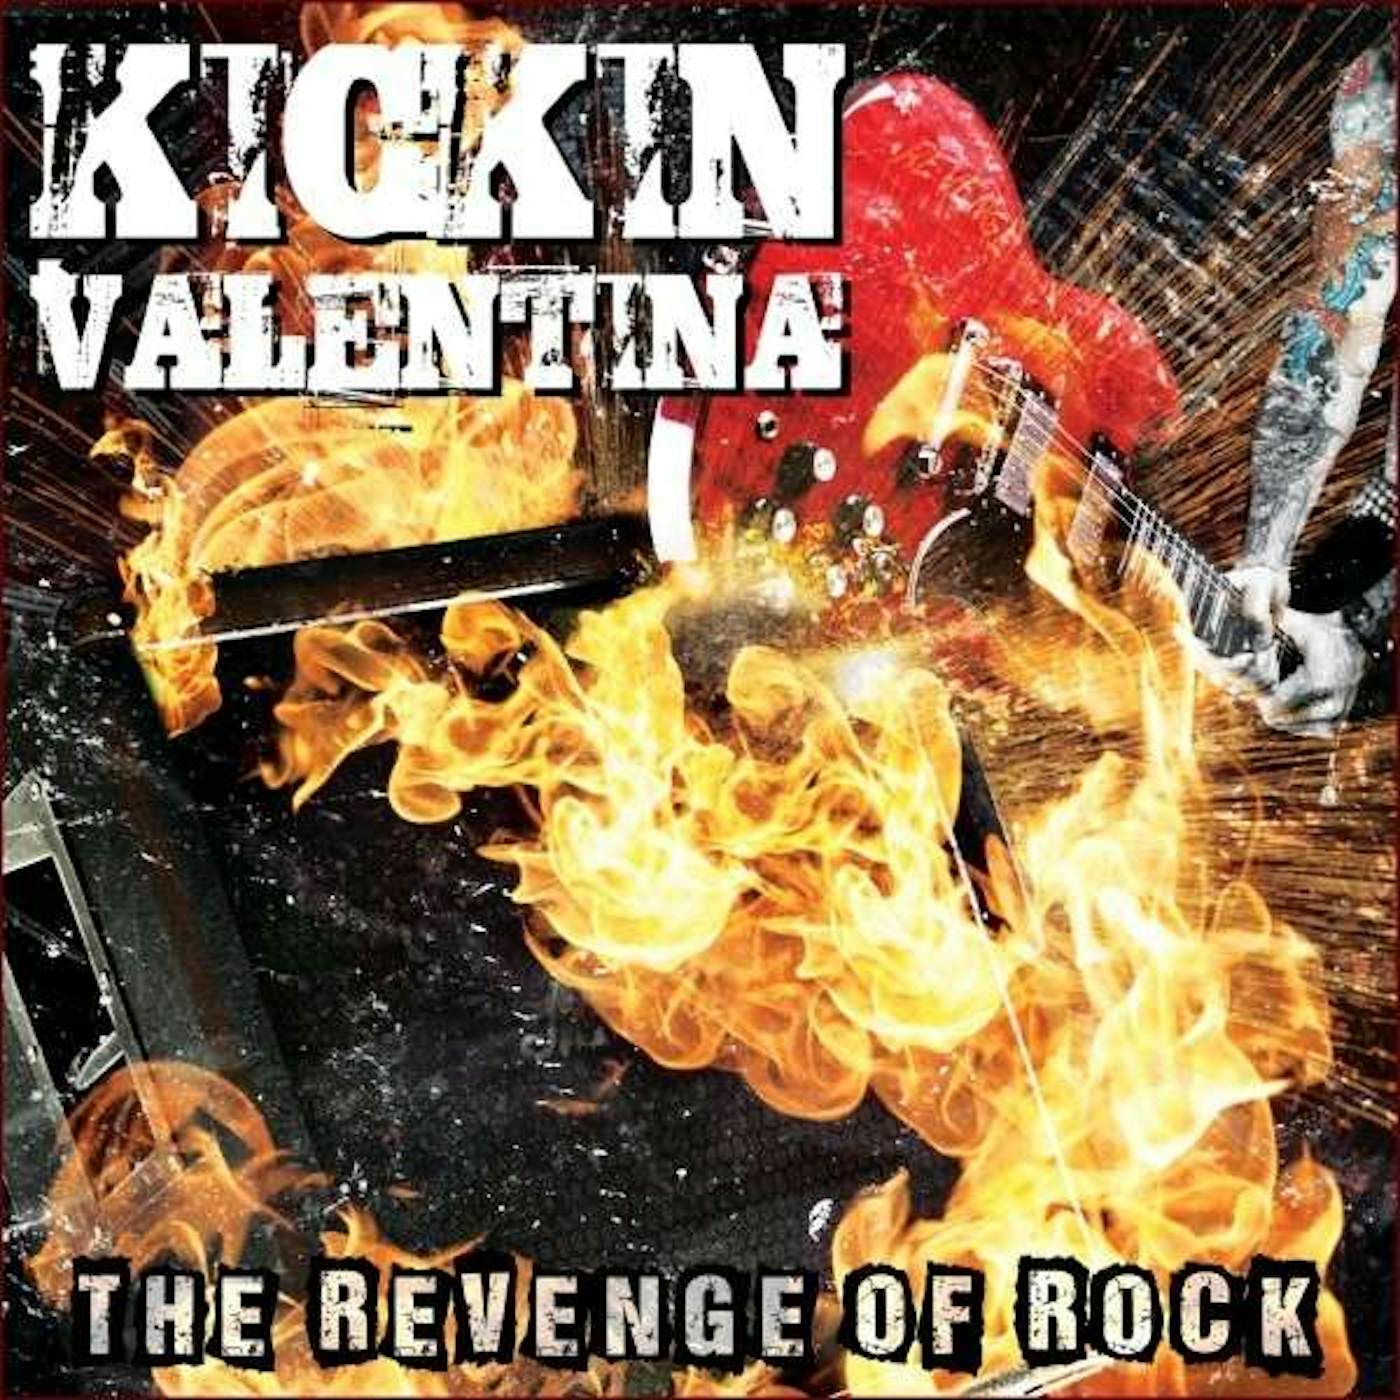 Kickin Valentina REVENGE OF ROCK Vinyl Record